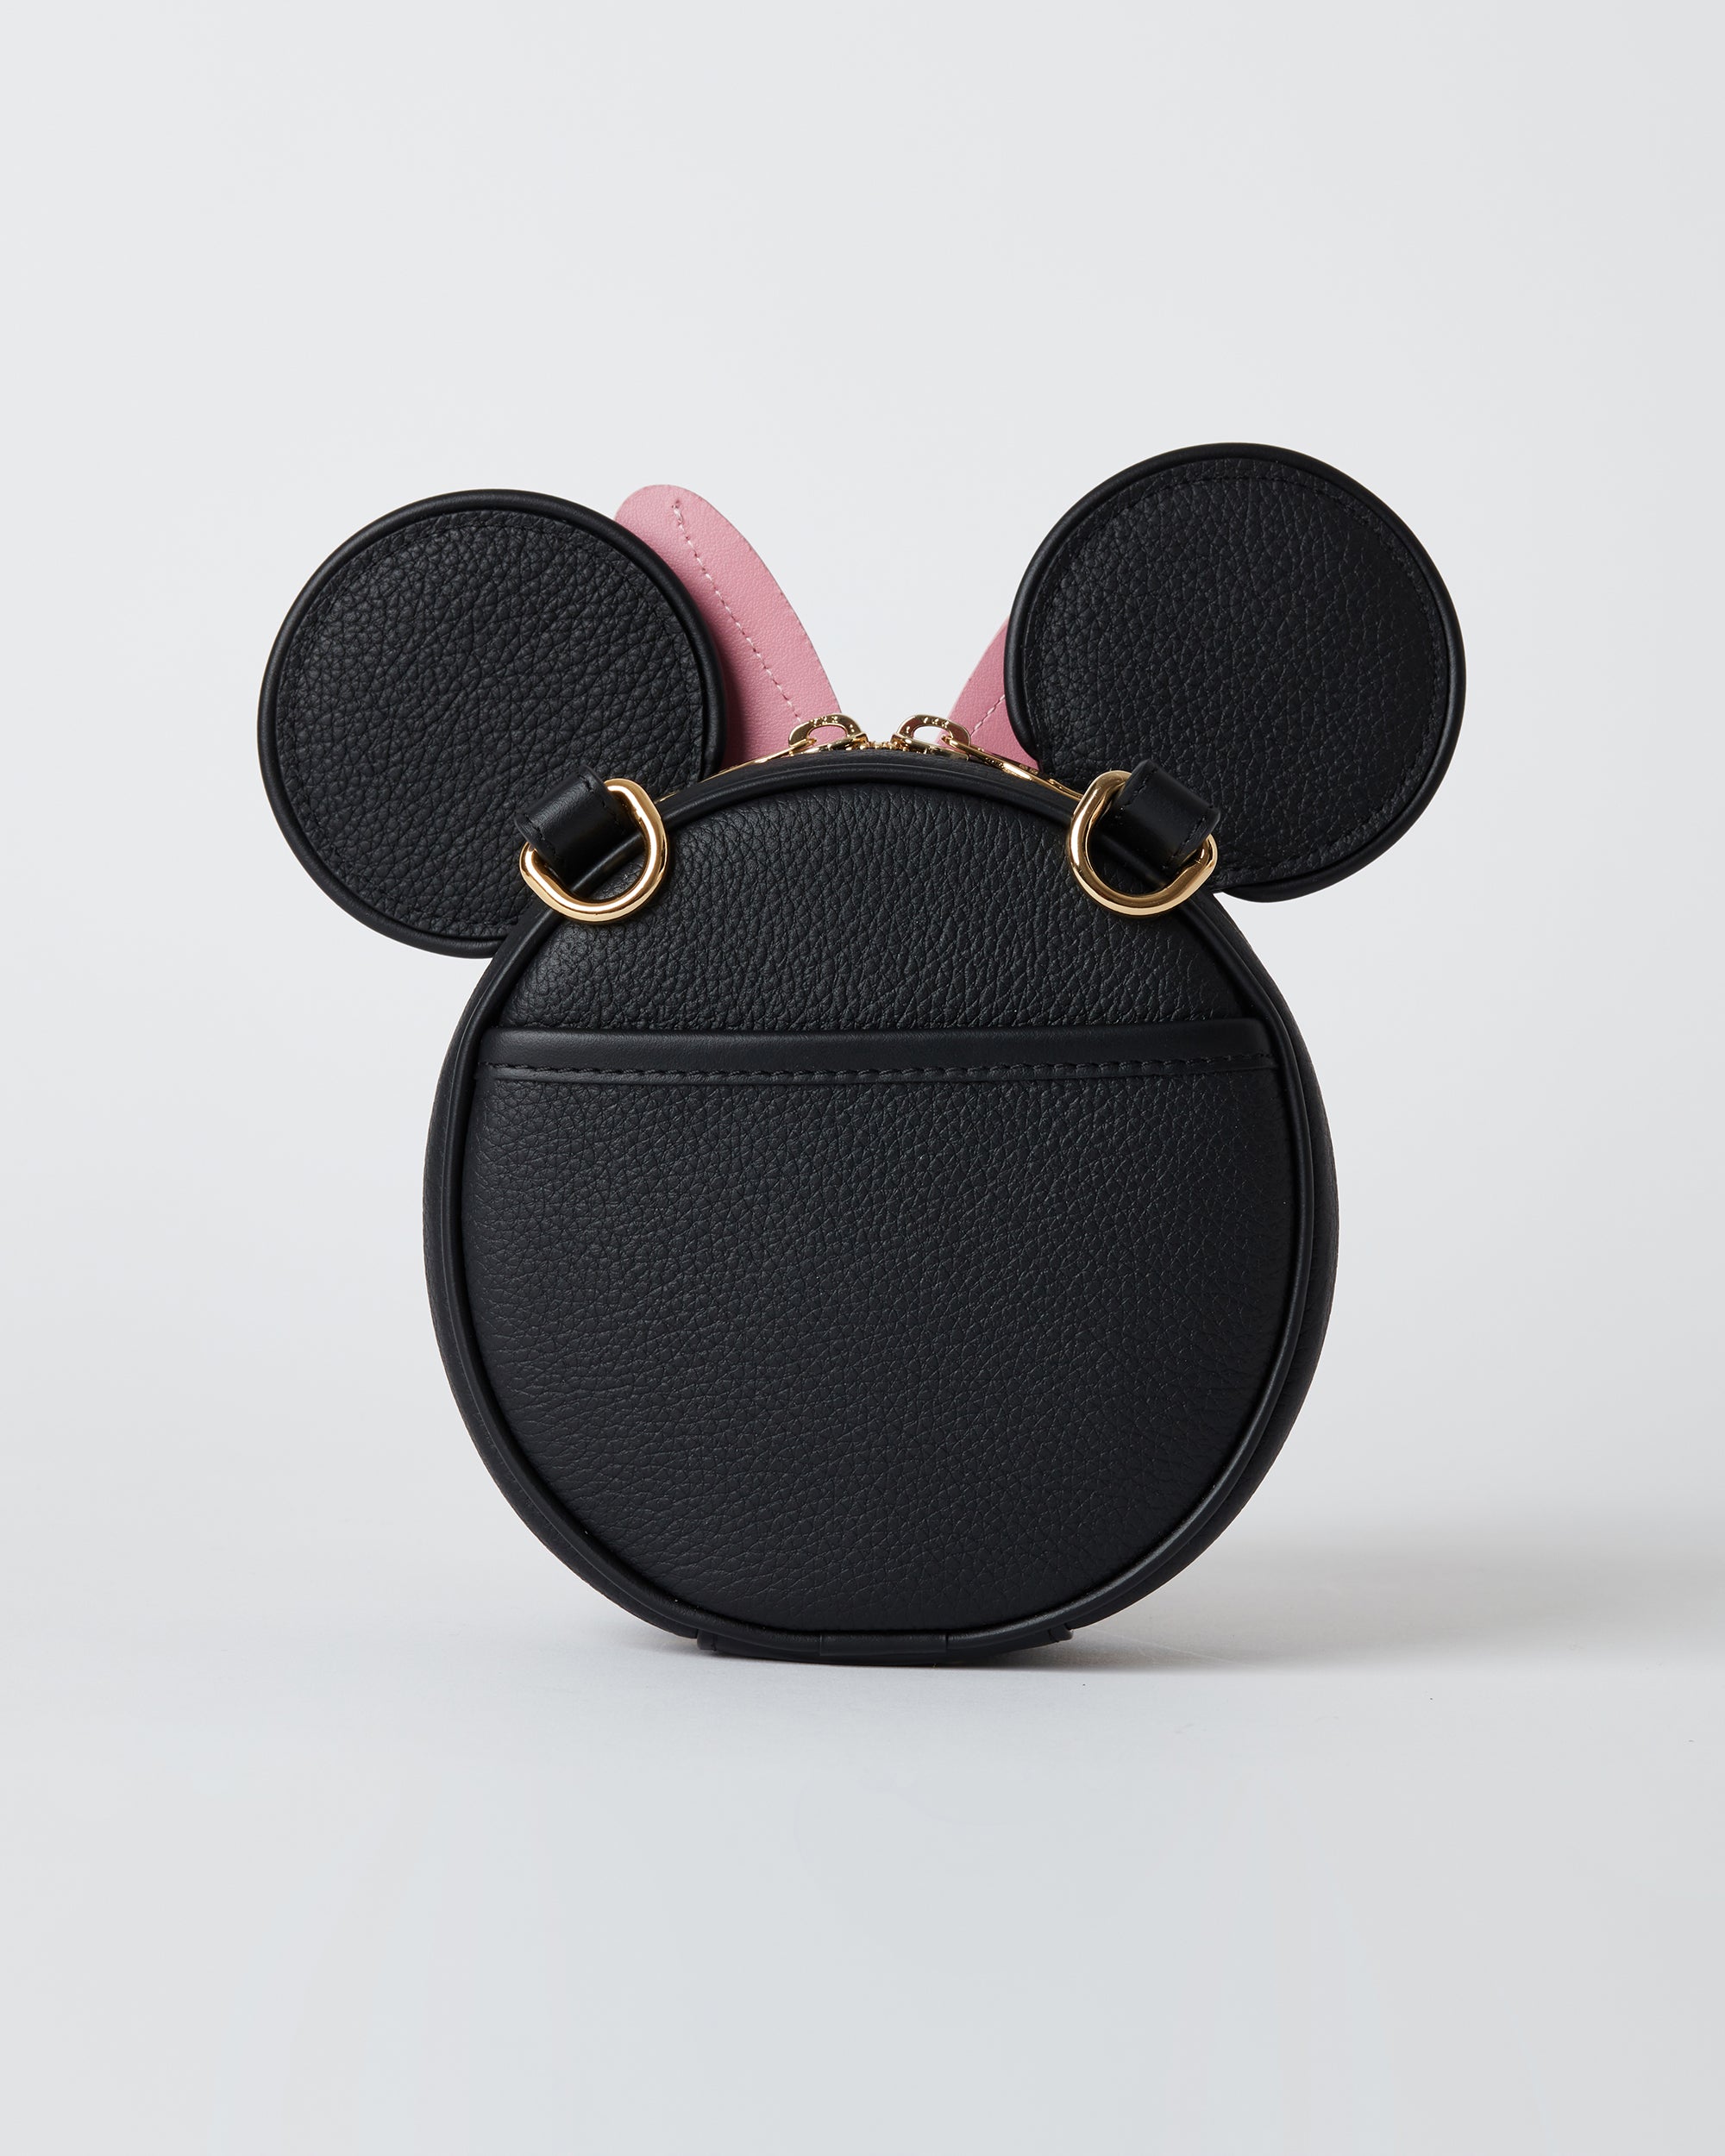 NTWRK Exclusive Sheron Barber Black Minnie Mouse Crossbody Bag Purse BRAND  NEW!